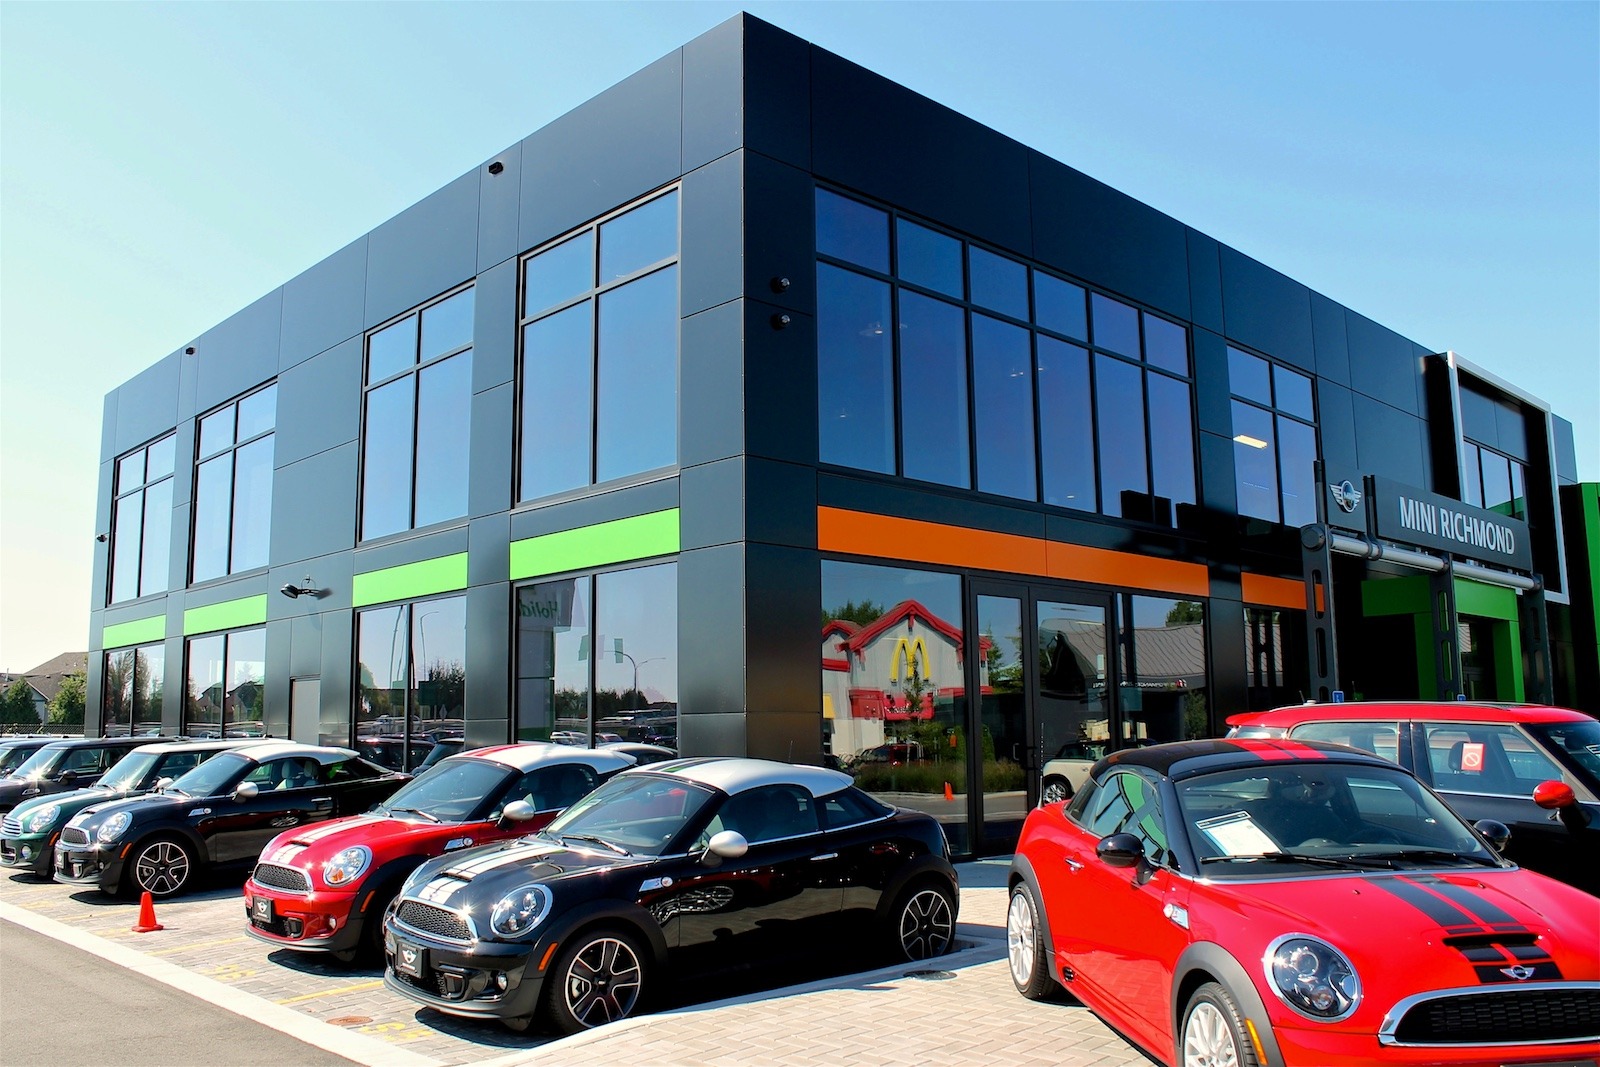 Mini Richmond Luxury Car Dealership Completed 2013